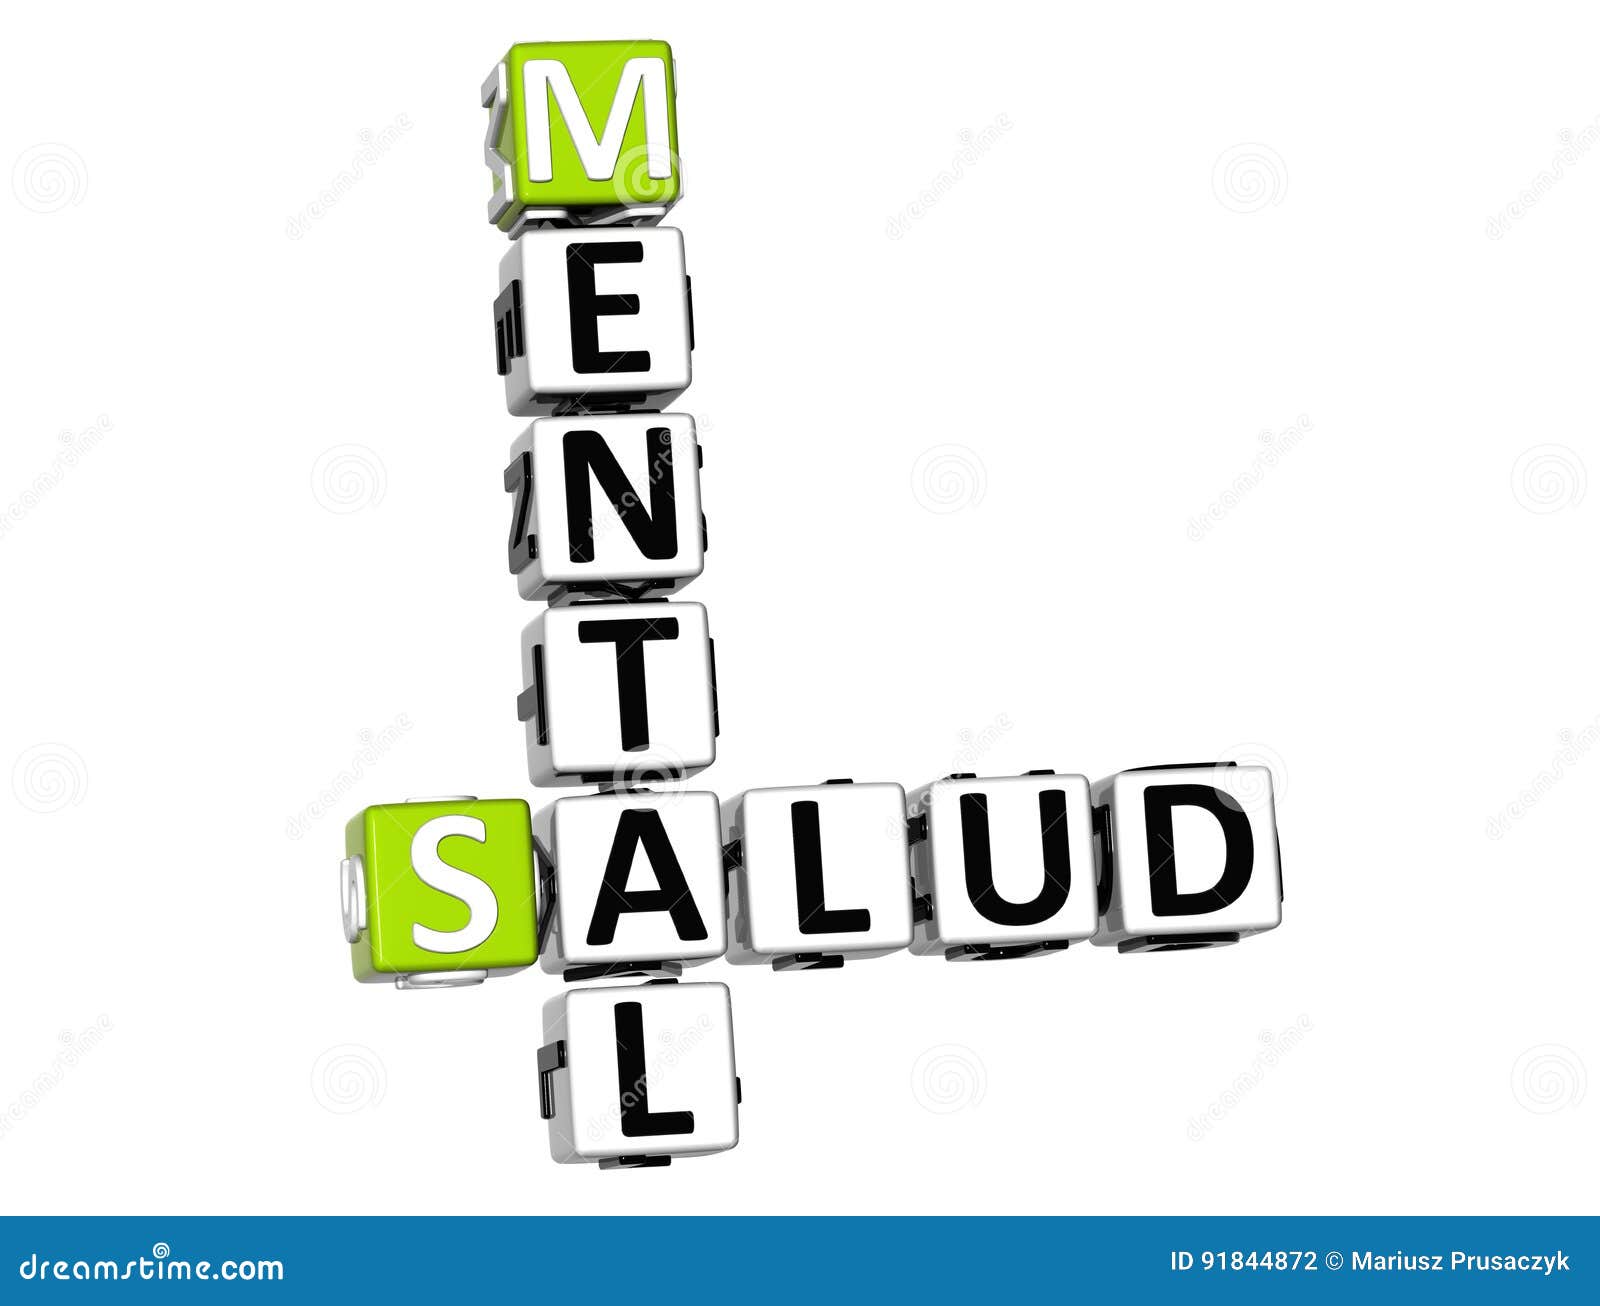 3d mental health mental salud crossword on white background